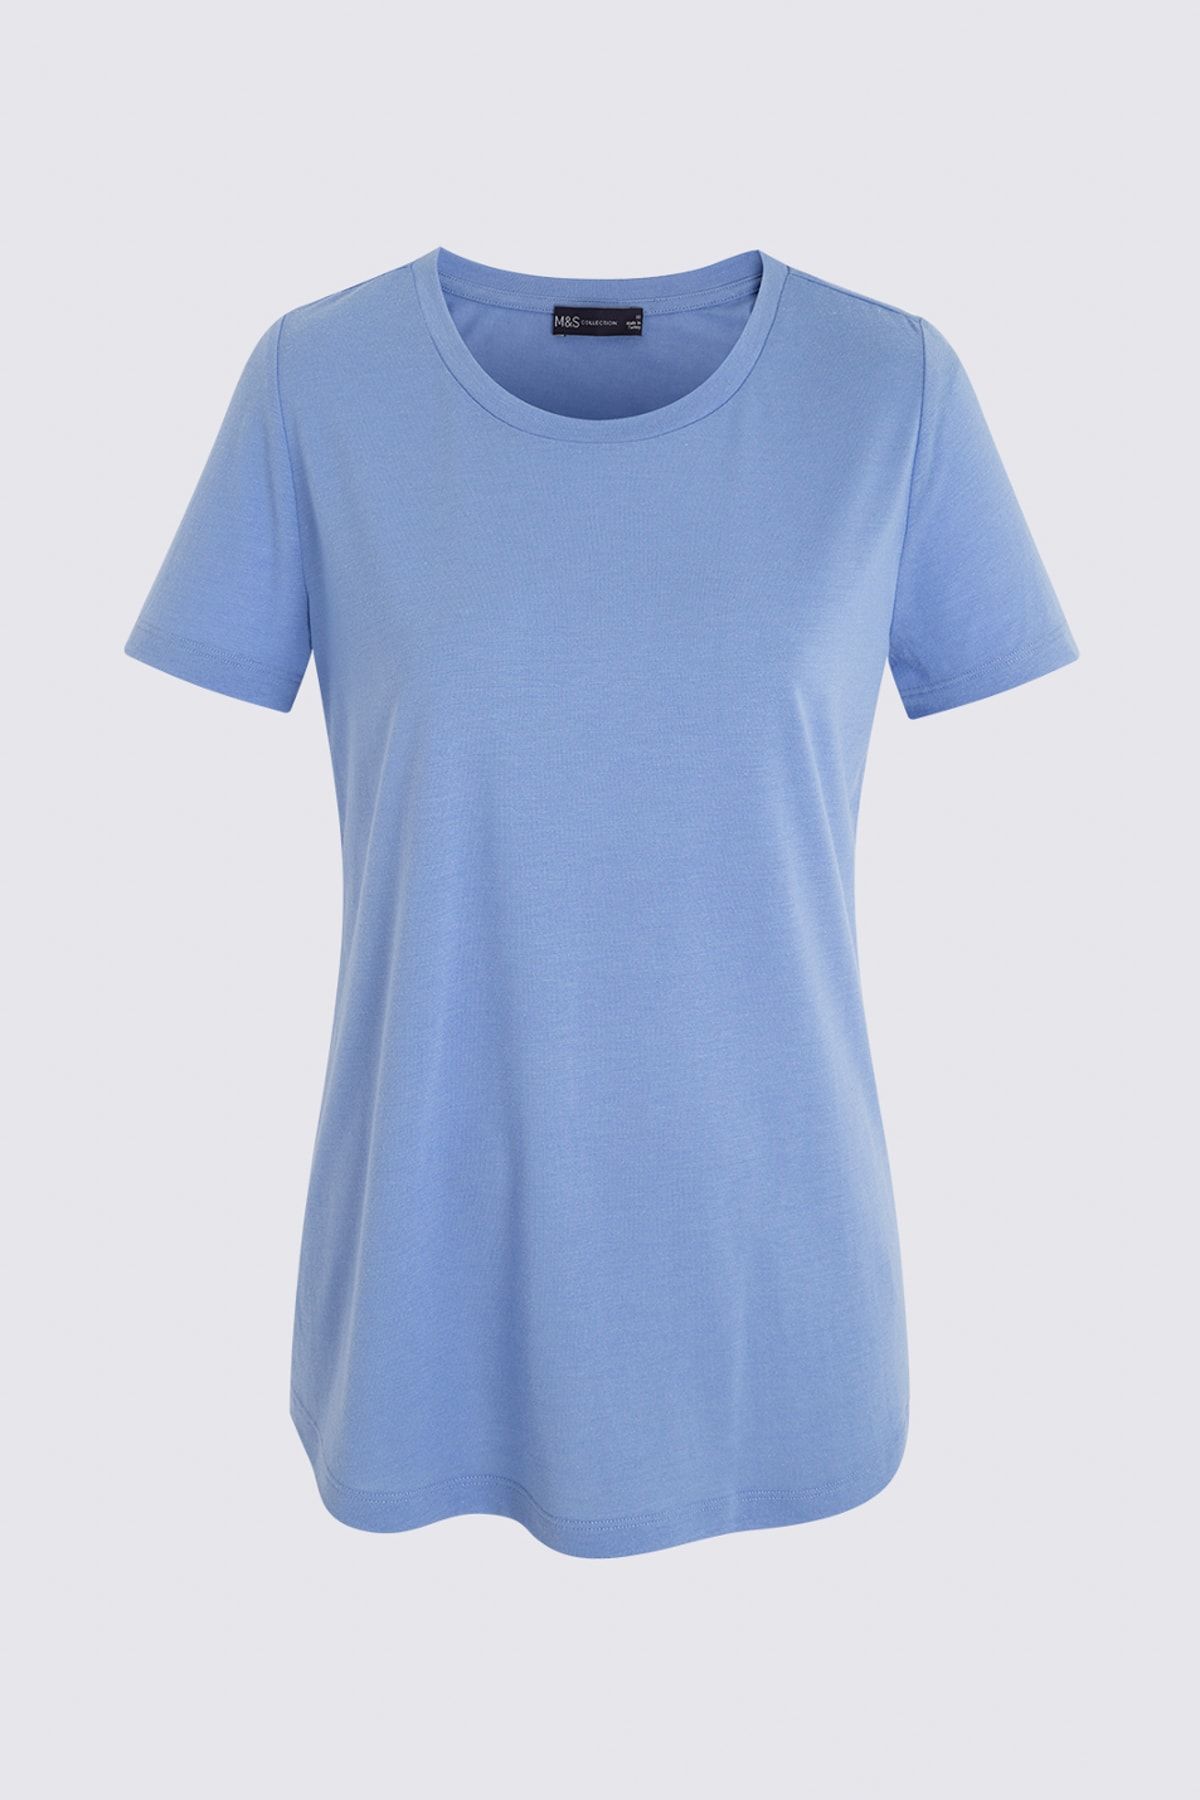 Marks & Spencer Kadın Mor Kısa Kollu Relaxed T-Shirt T41001299H